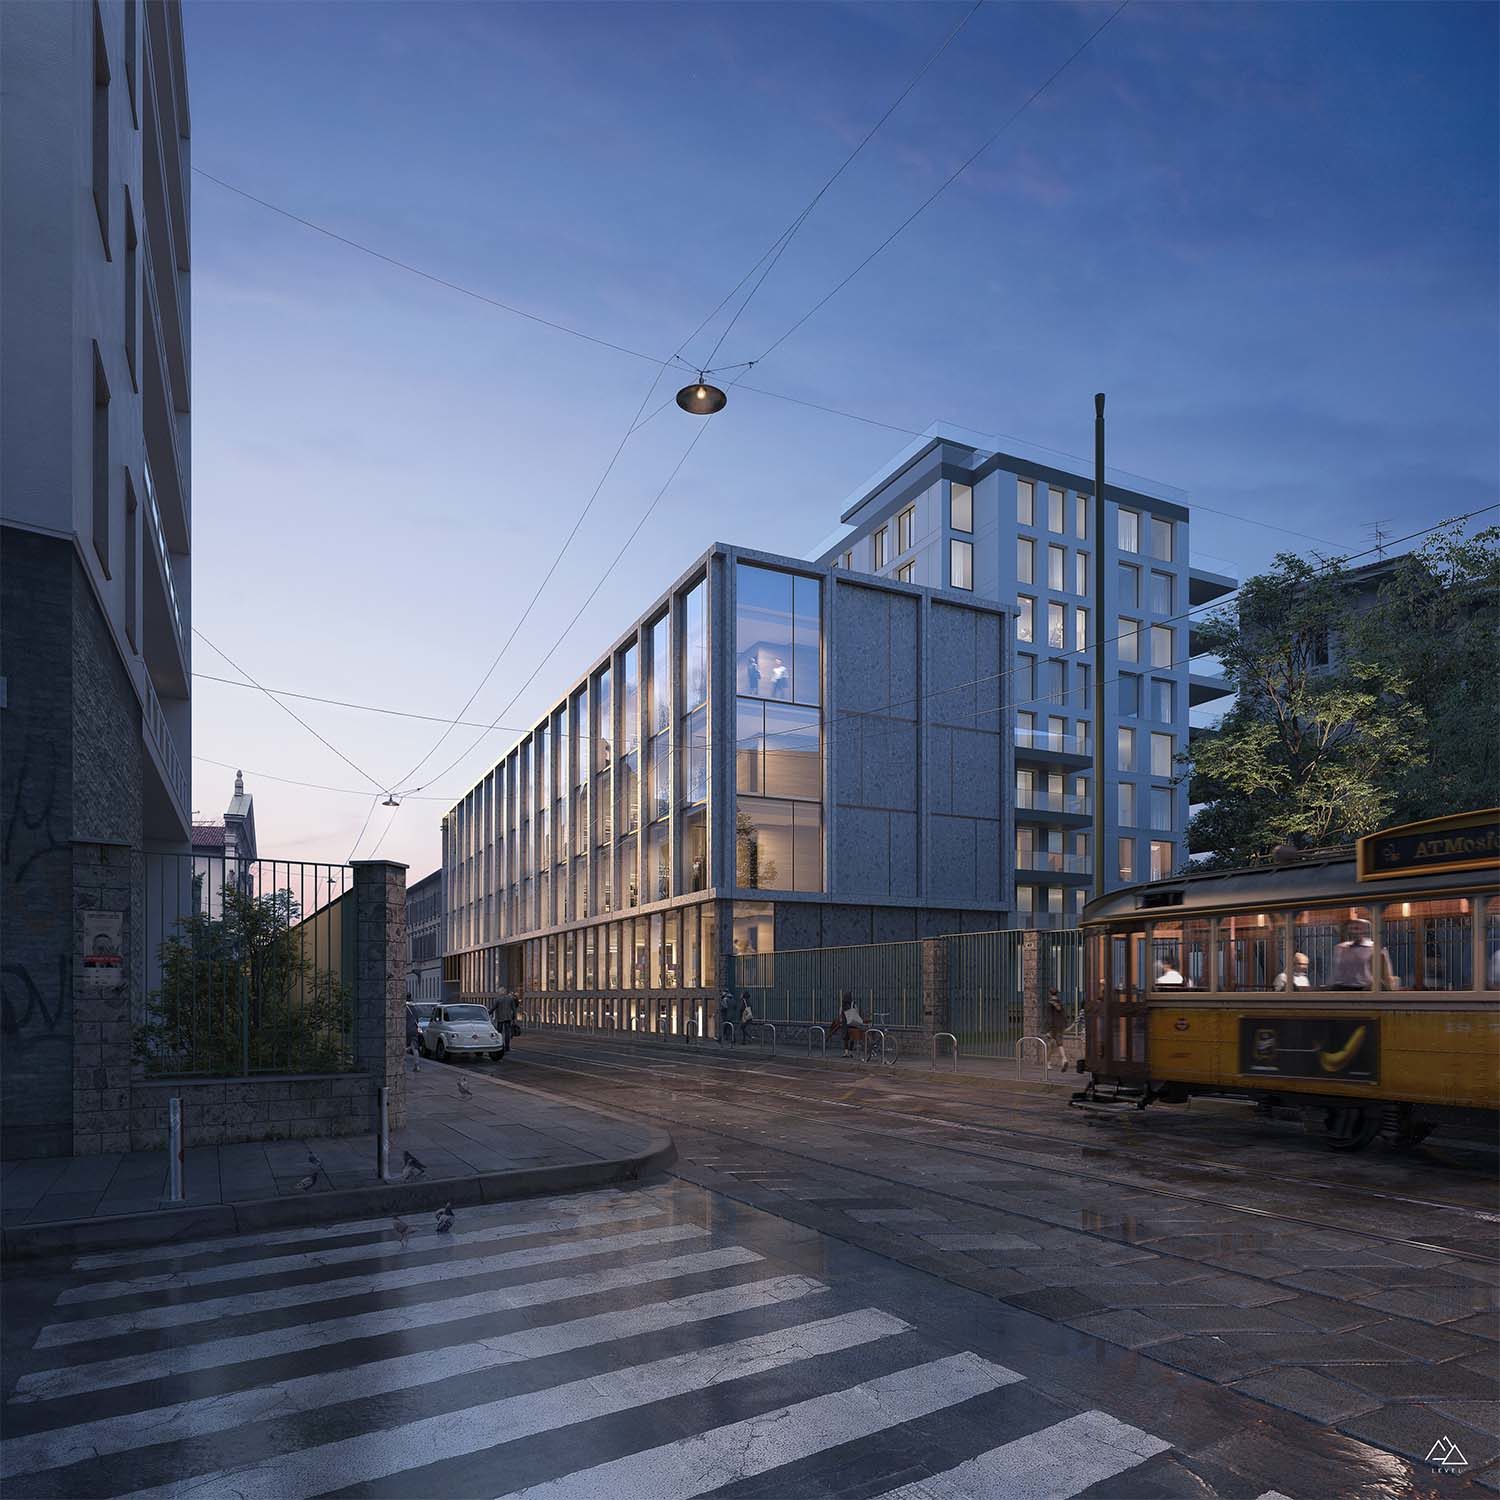 New Unipol headquarters in Porta Vigentina in Milan, Italy – Genius loci architettura, 2019